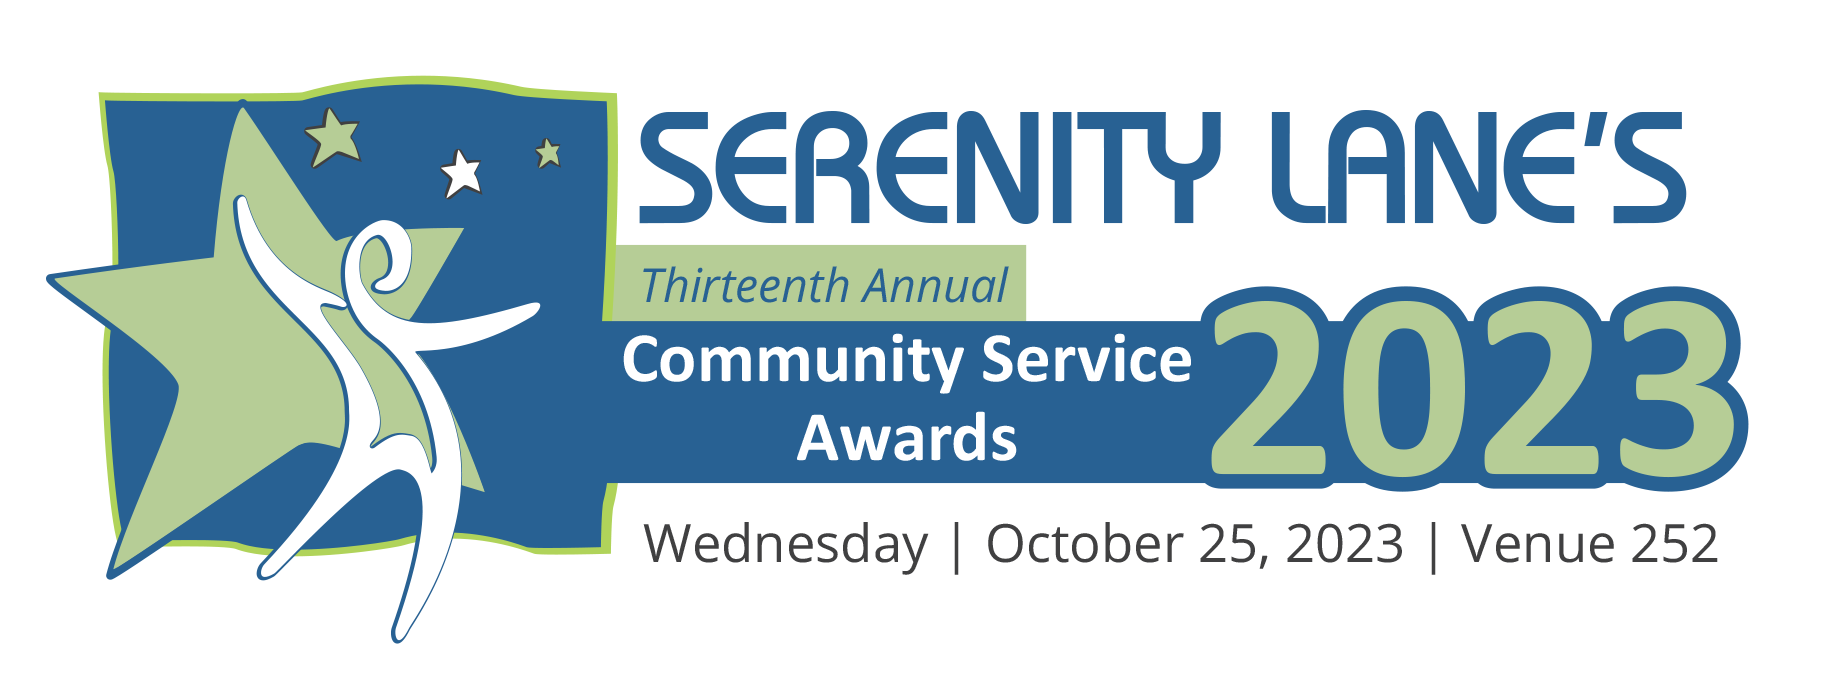 2023 Community Service Awards